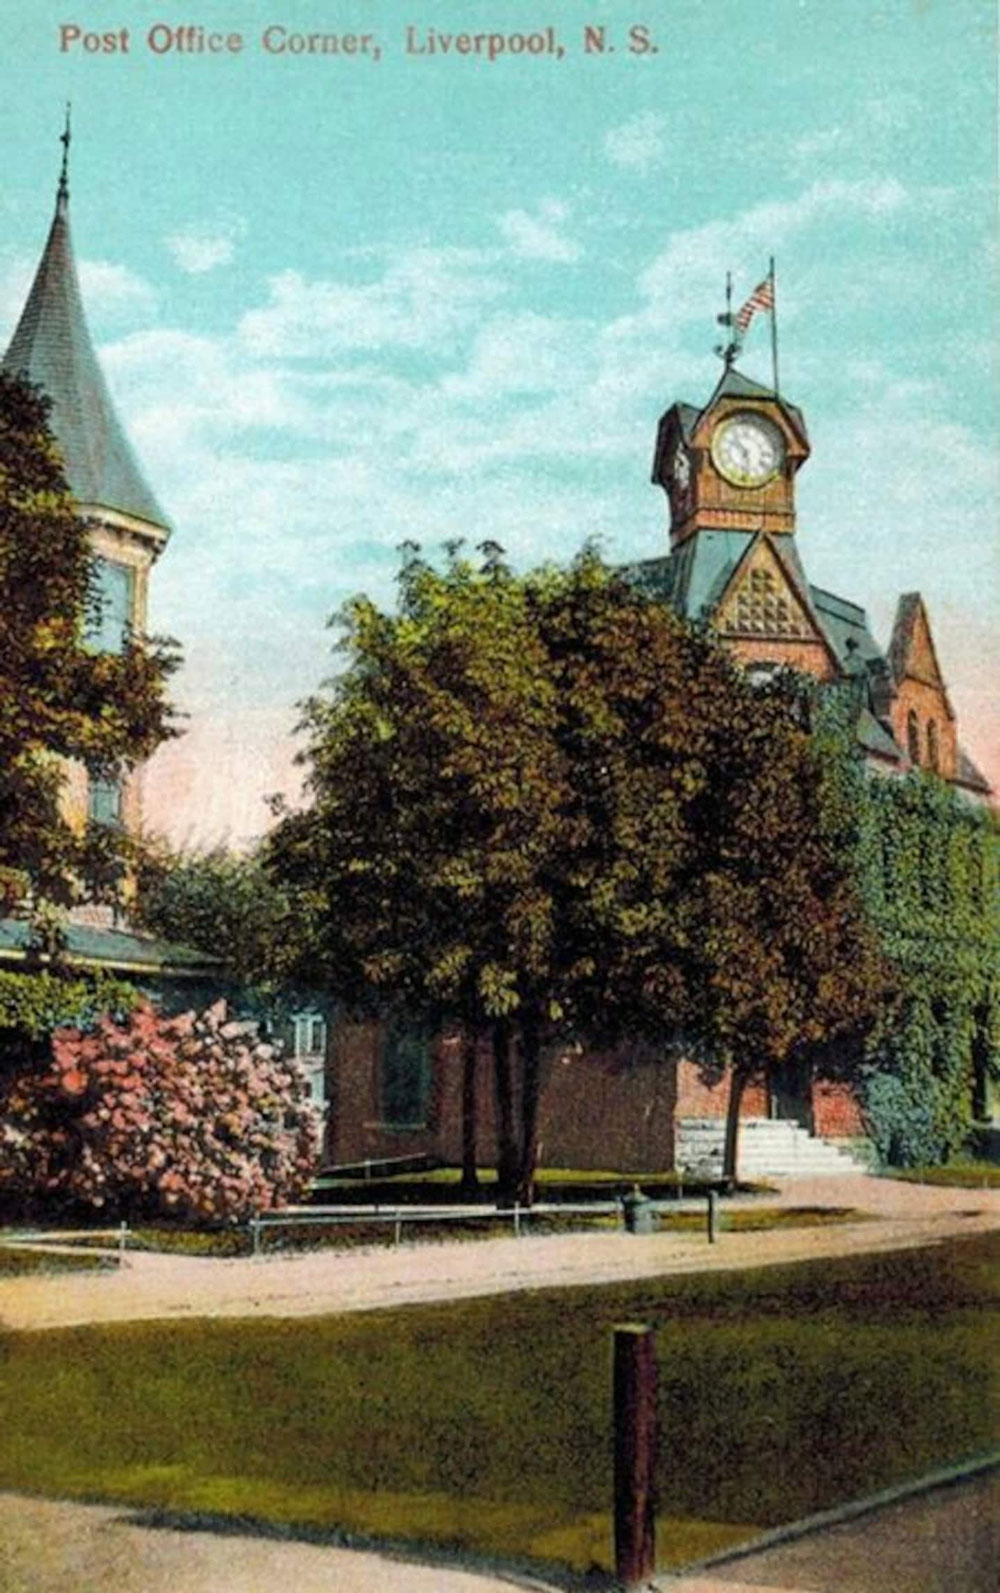 Senator Smith Inn (left) in historic postcard